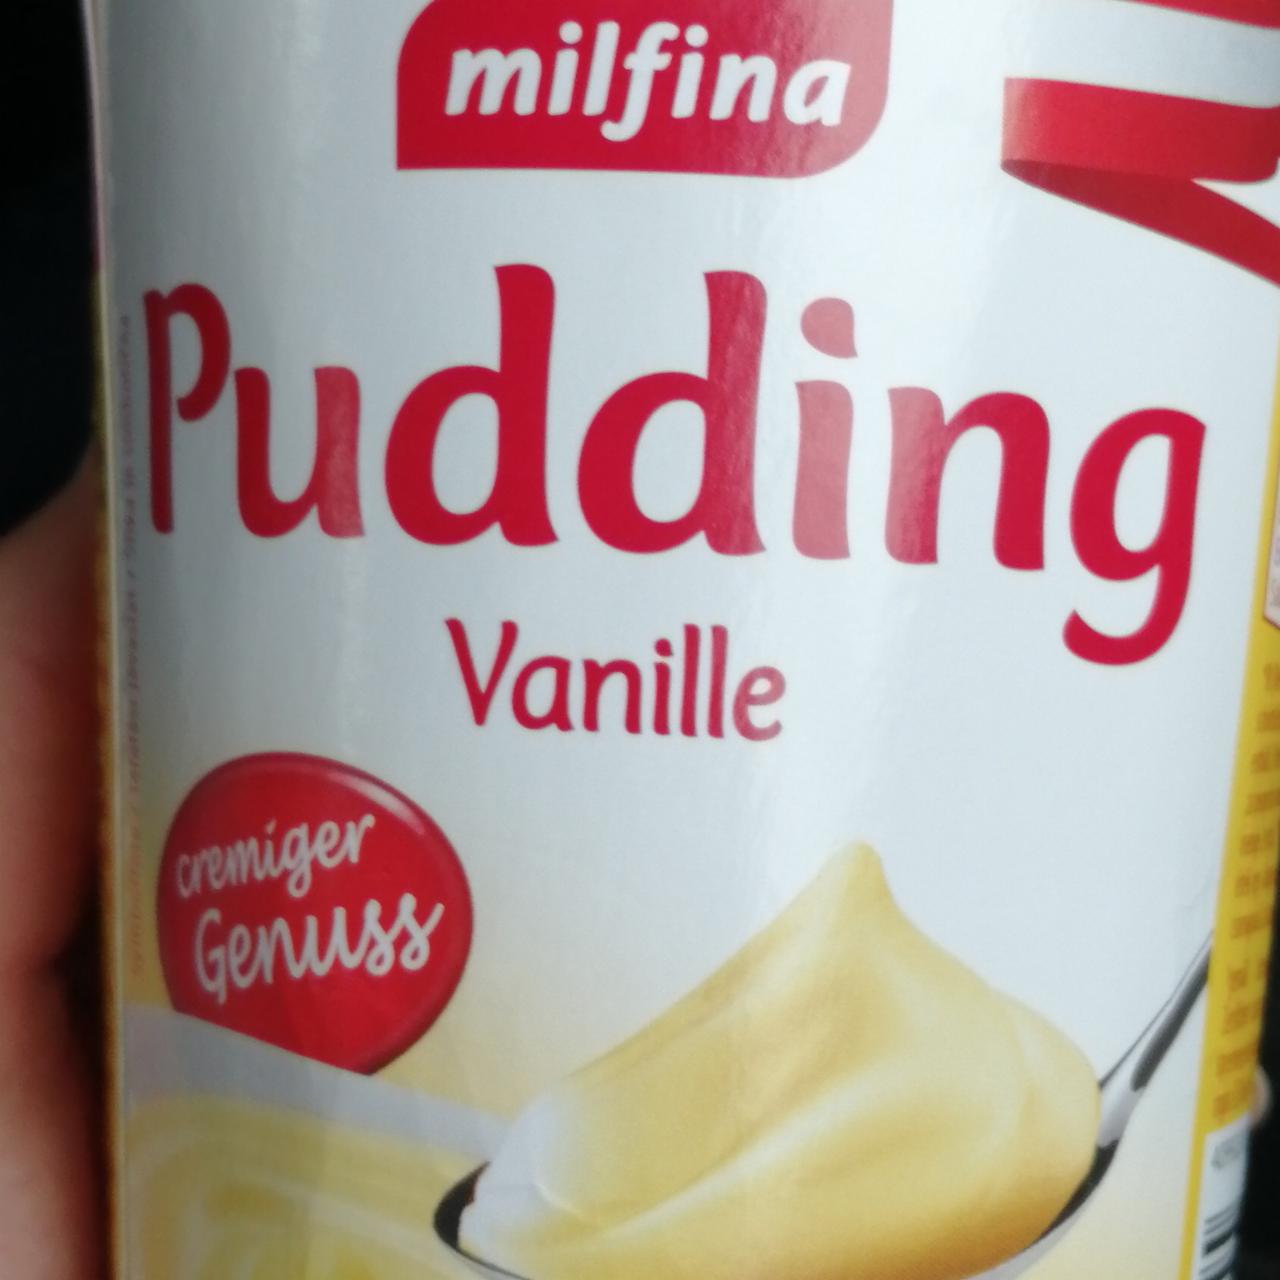 Képek - Pudding Vanille Milfina